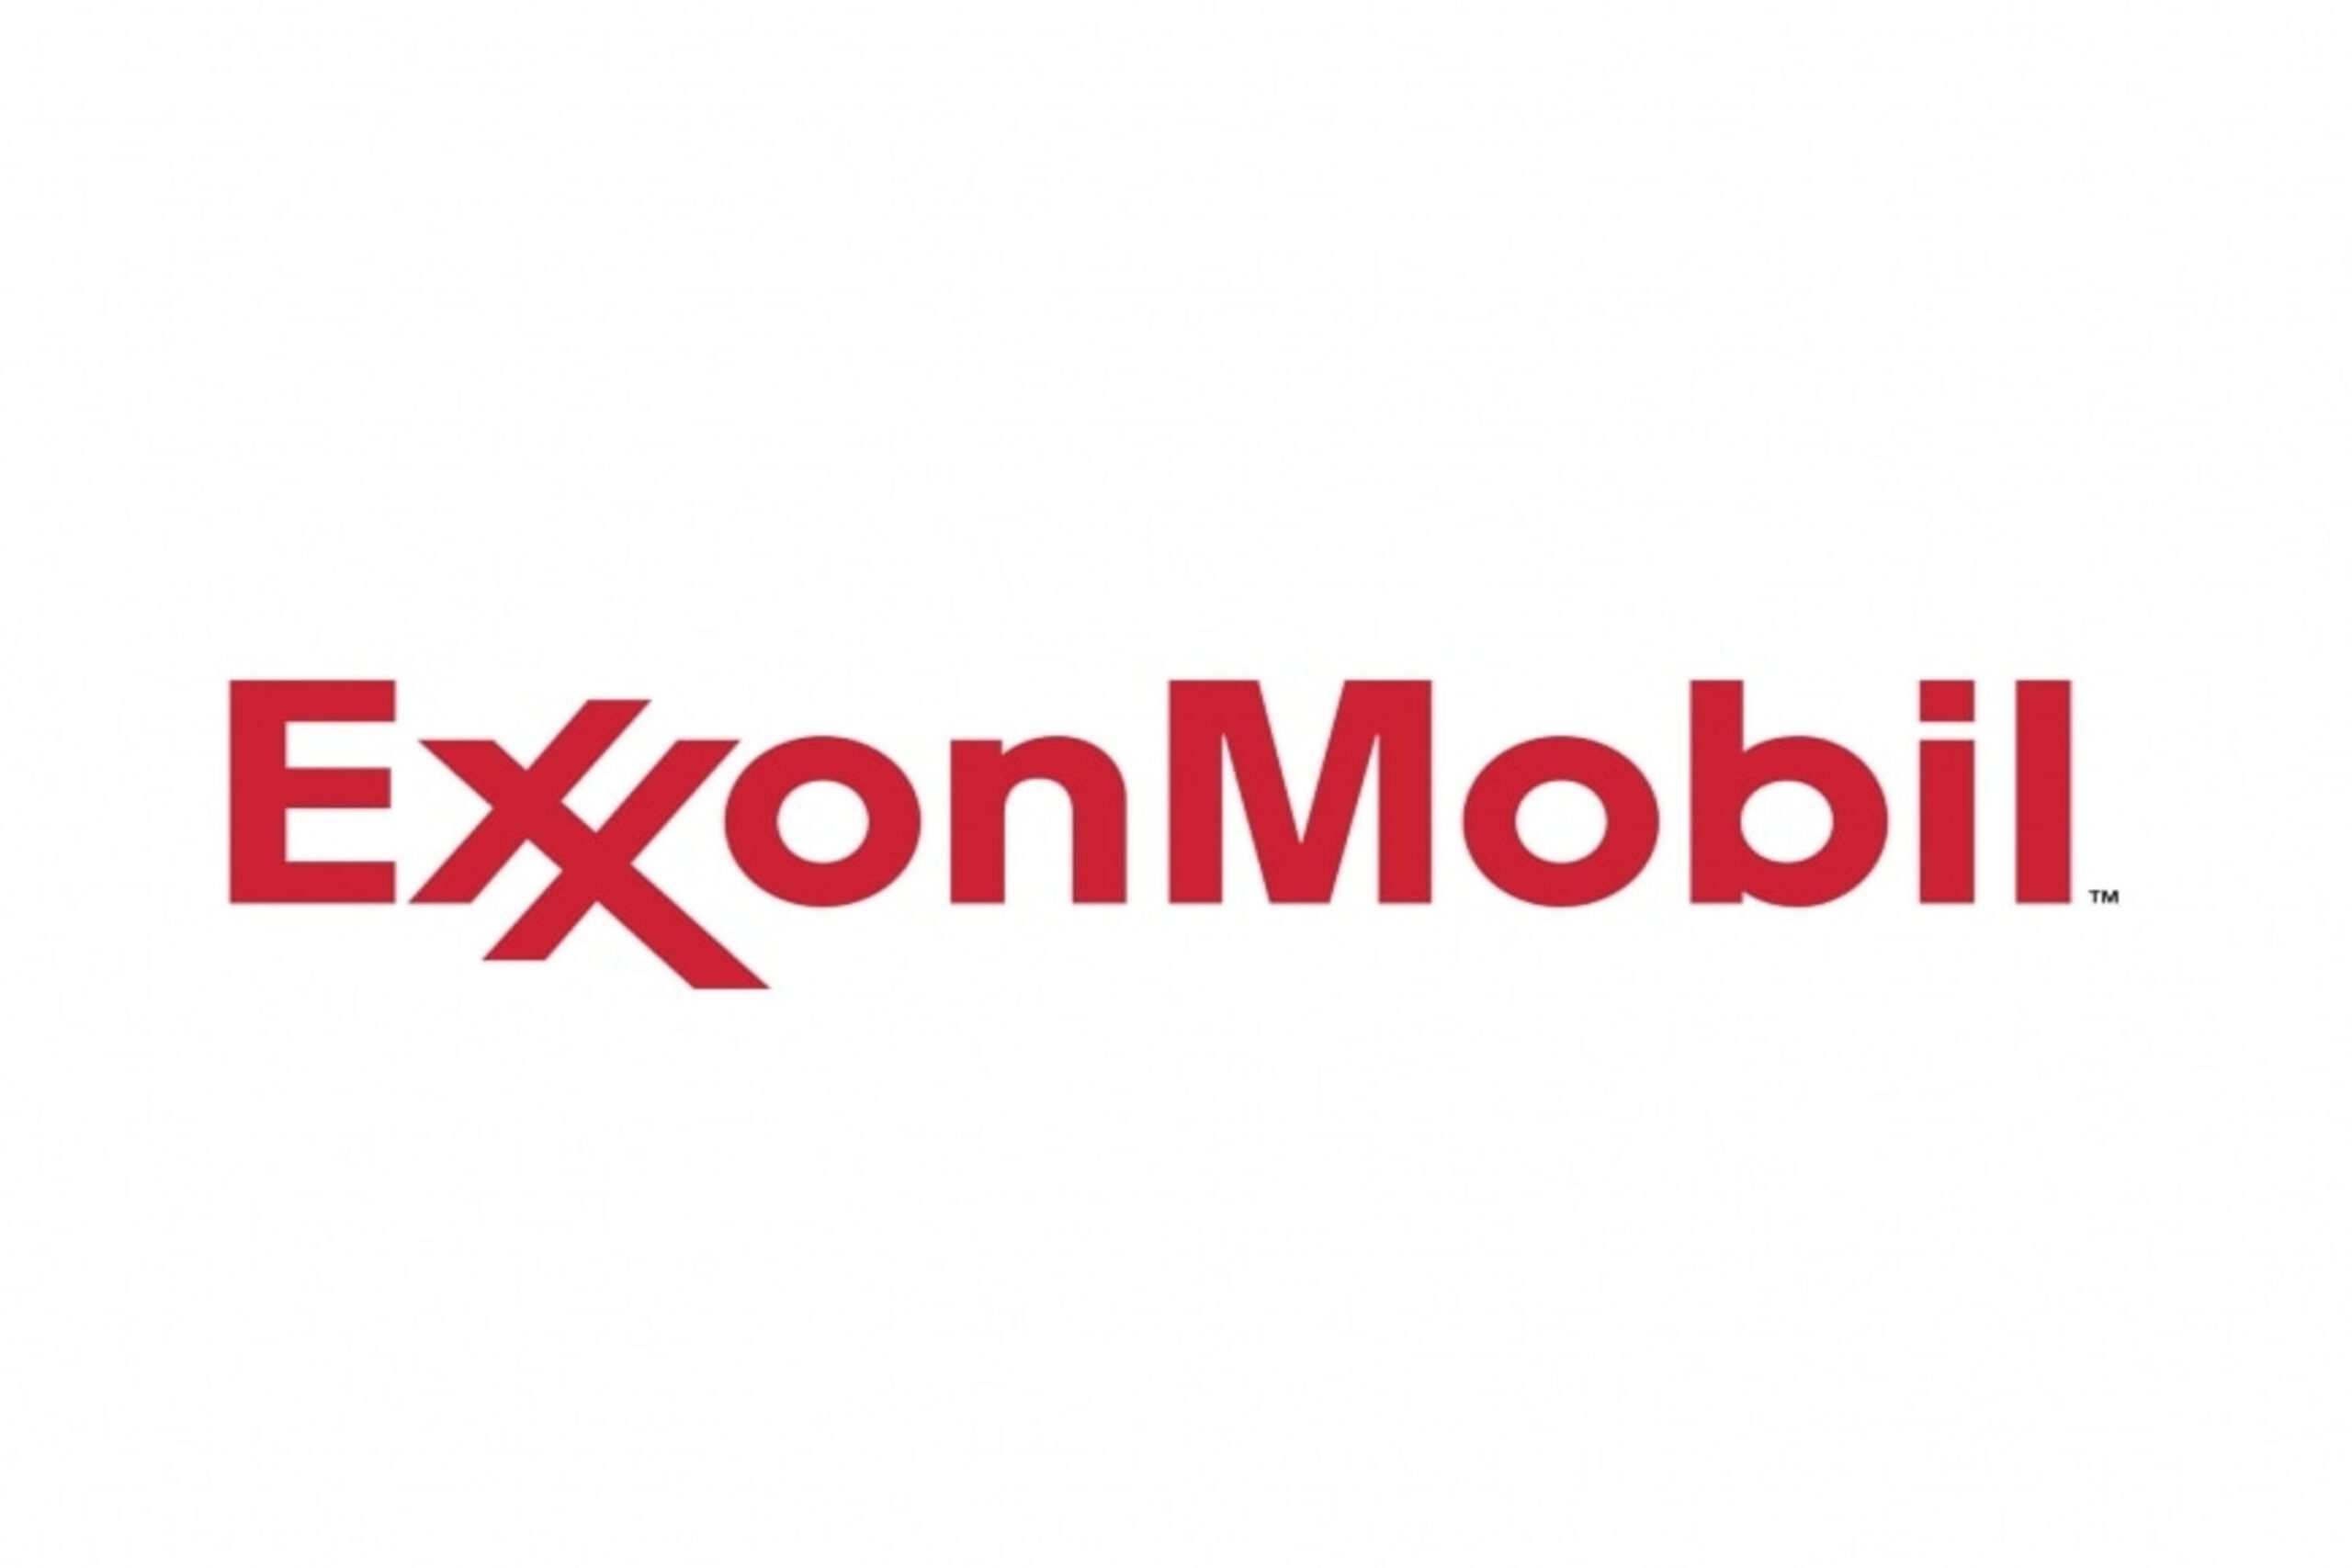 Customer Imt/Exxon Mobil